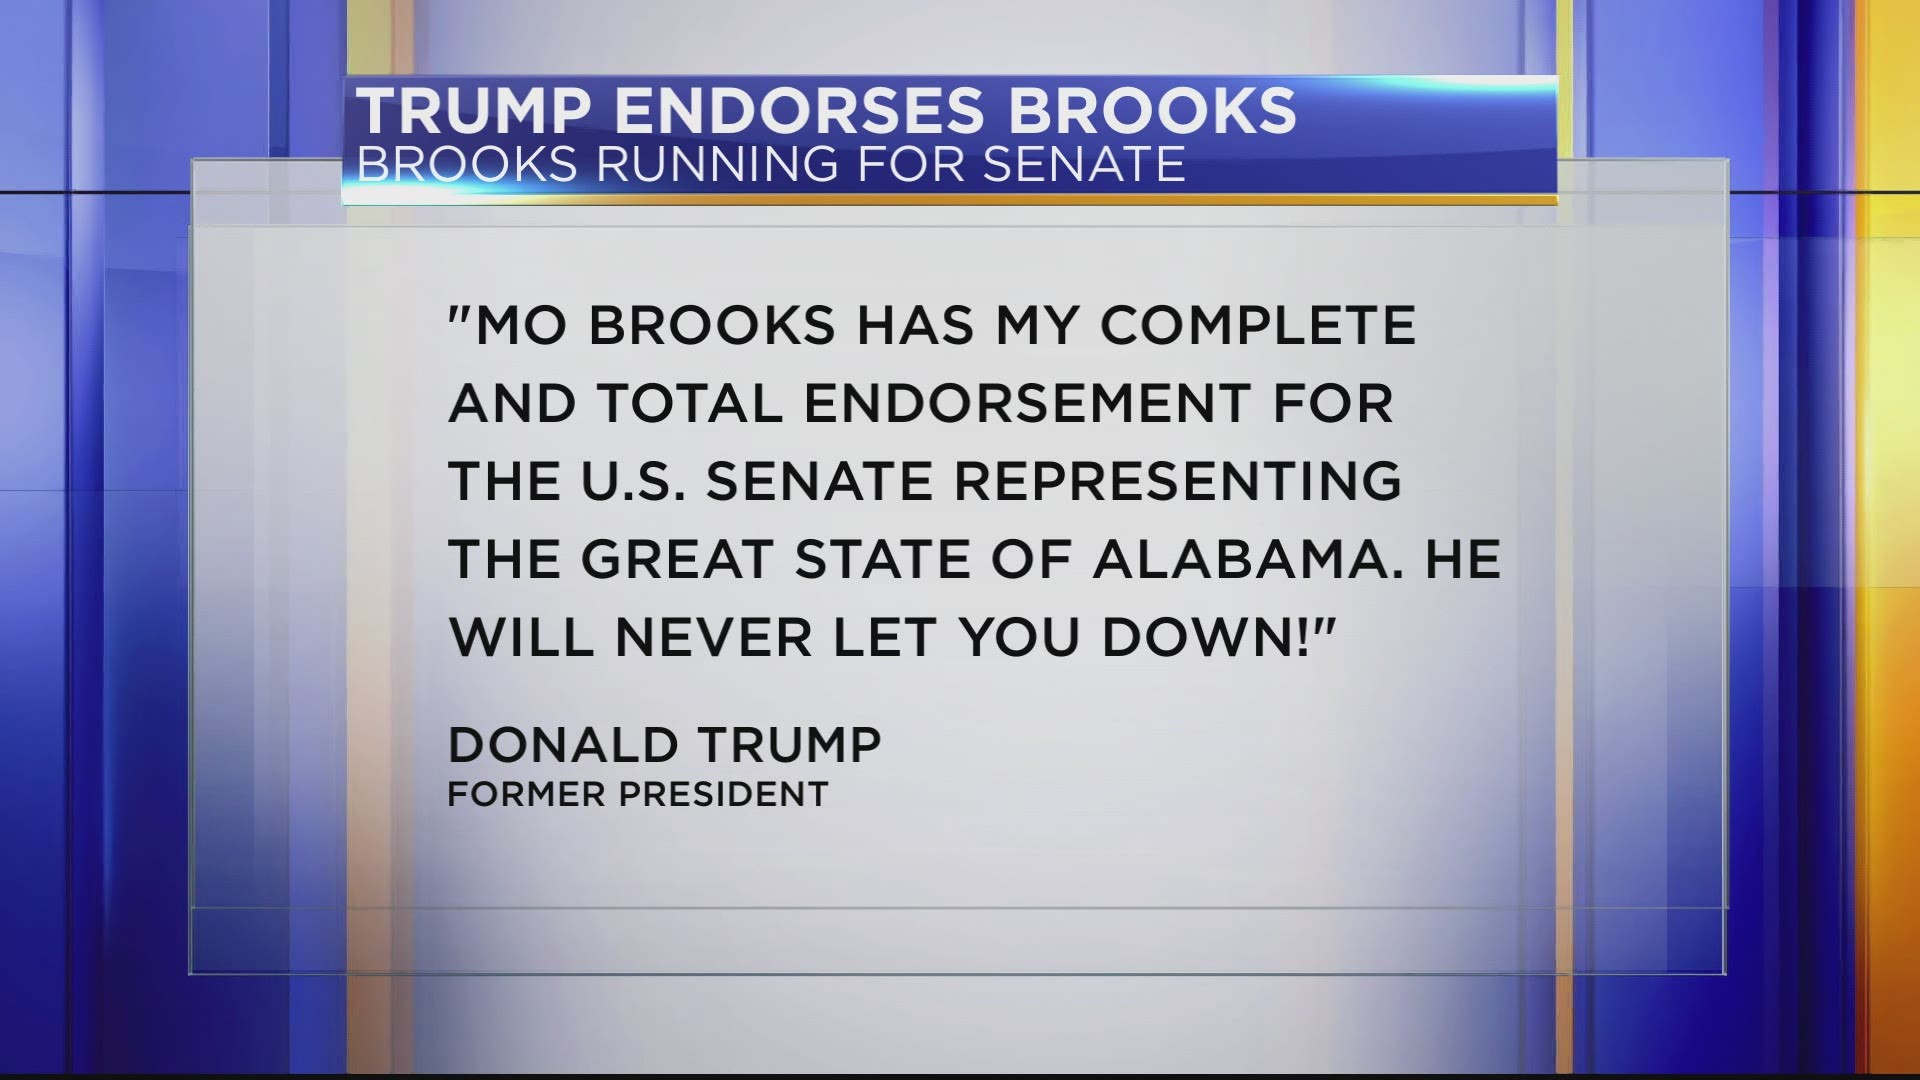 In an early morning press release, former President Donald Trump endorsed Congressman Mo Brooks, R-Alabama, in his bid for U.S. Senate.